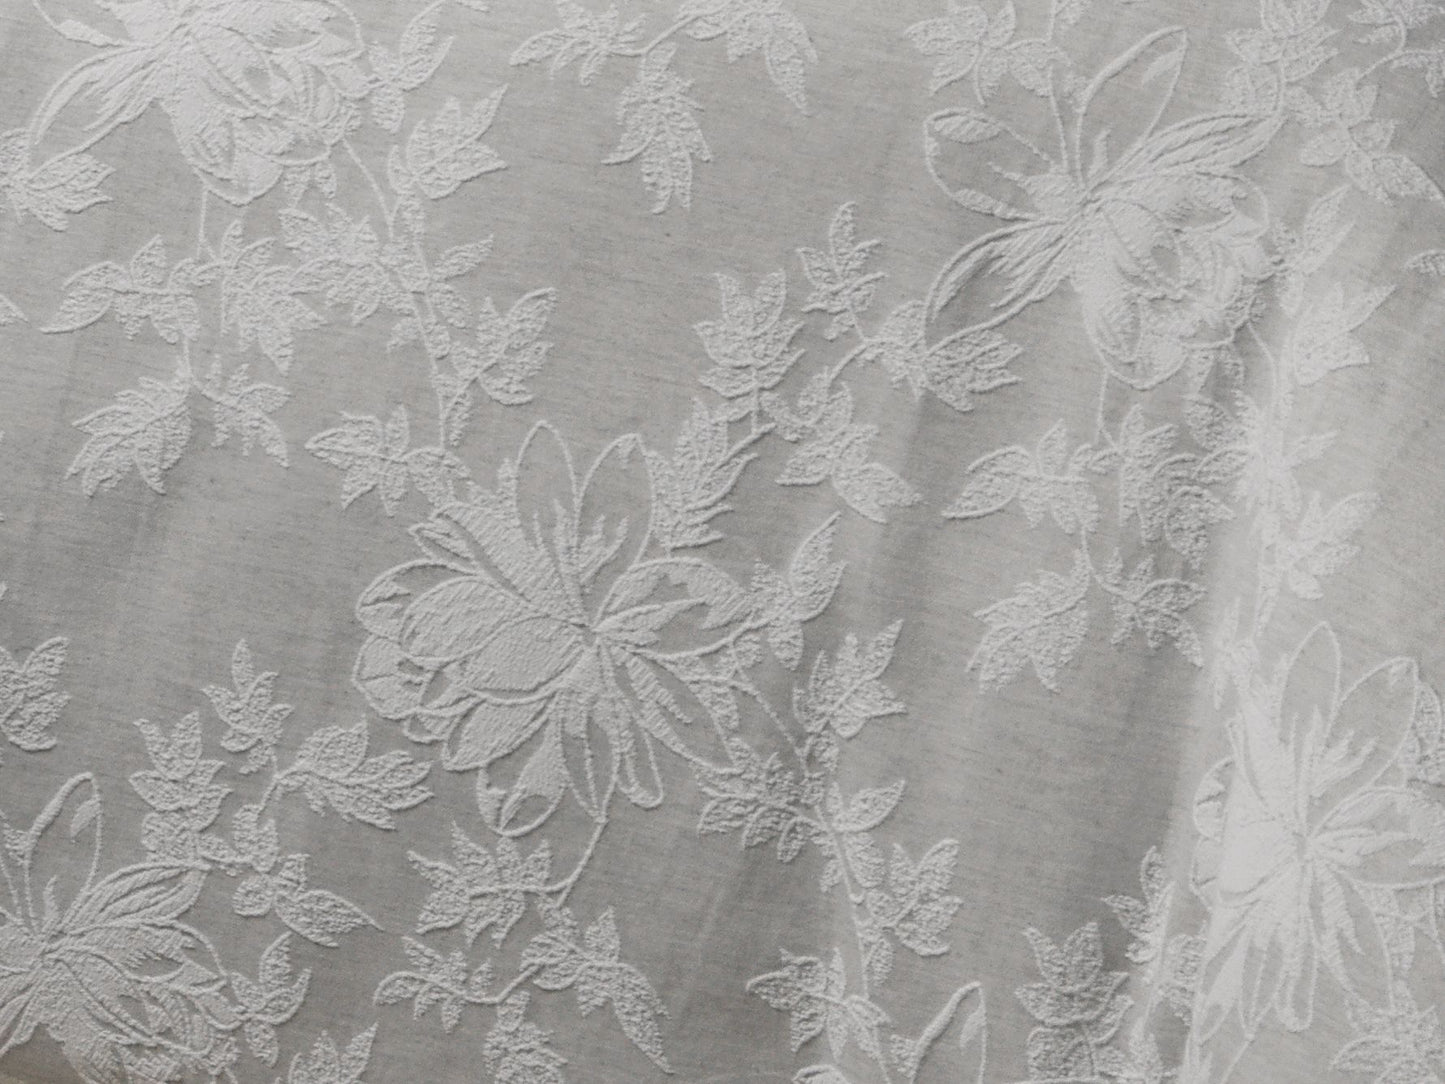 100% Cotton Kingston Jacquard Floral Design Duvet Cover in Grey